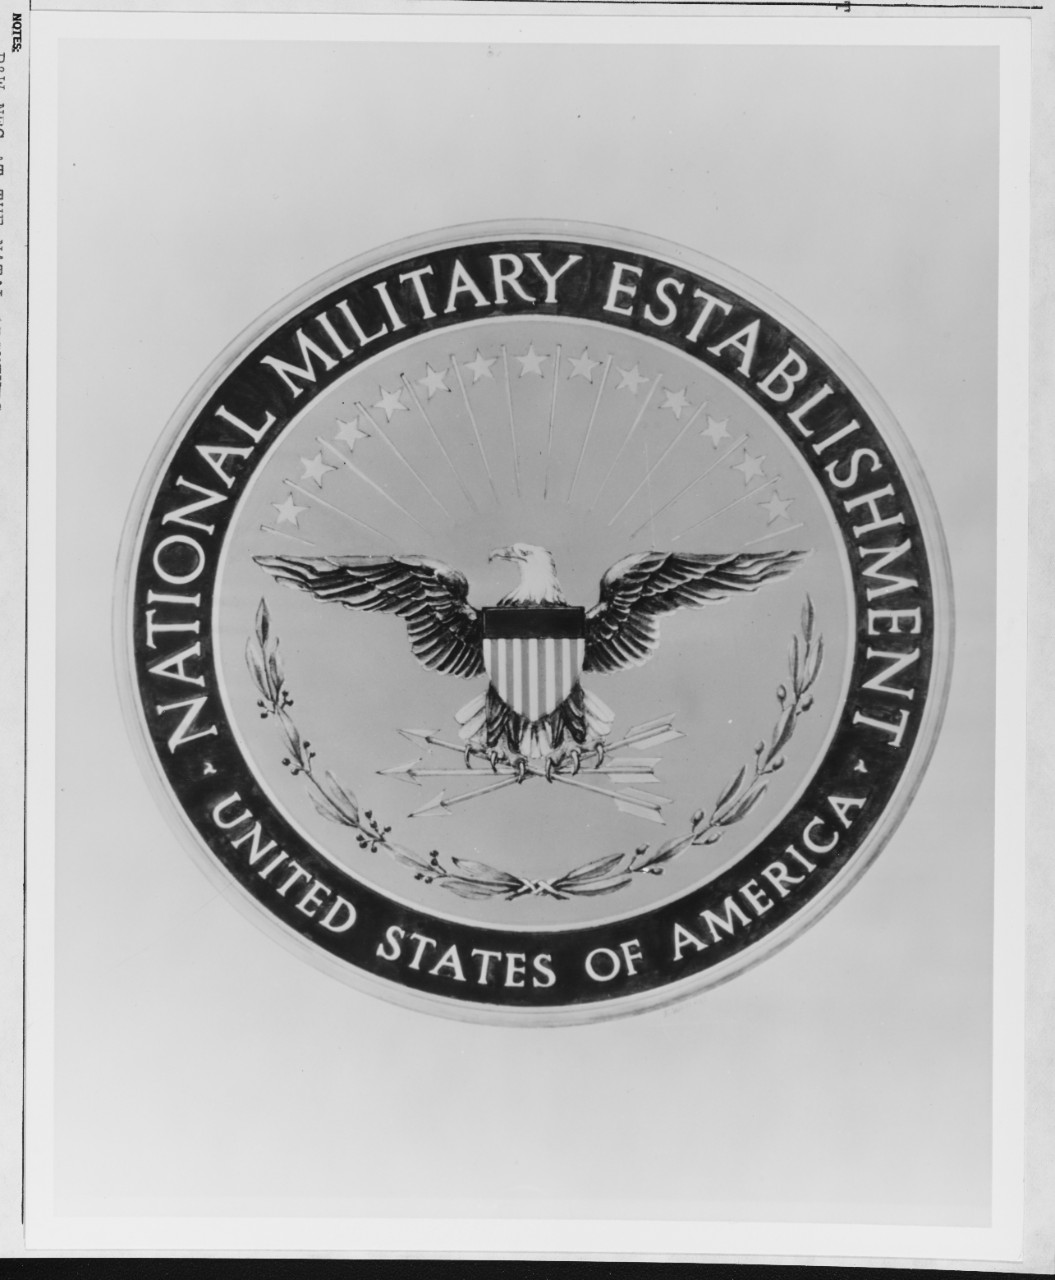 National Military Establishment Seal